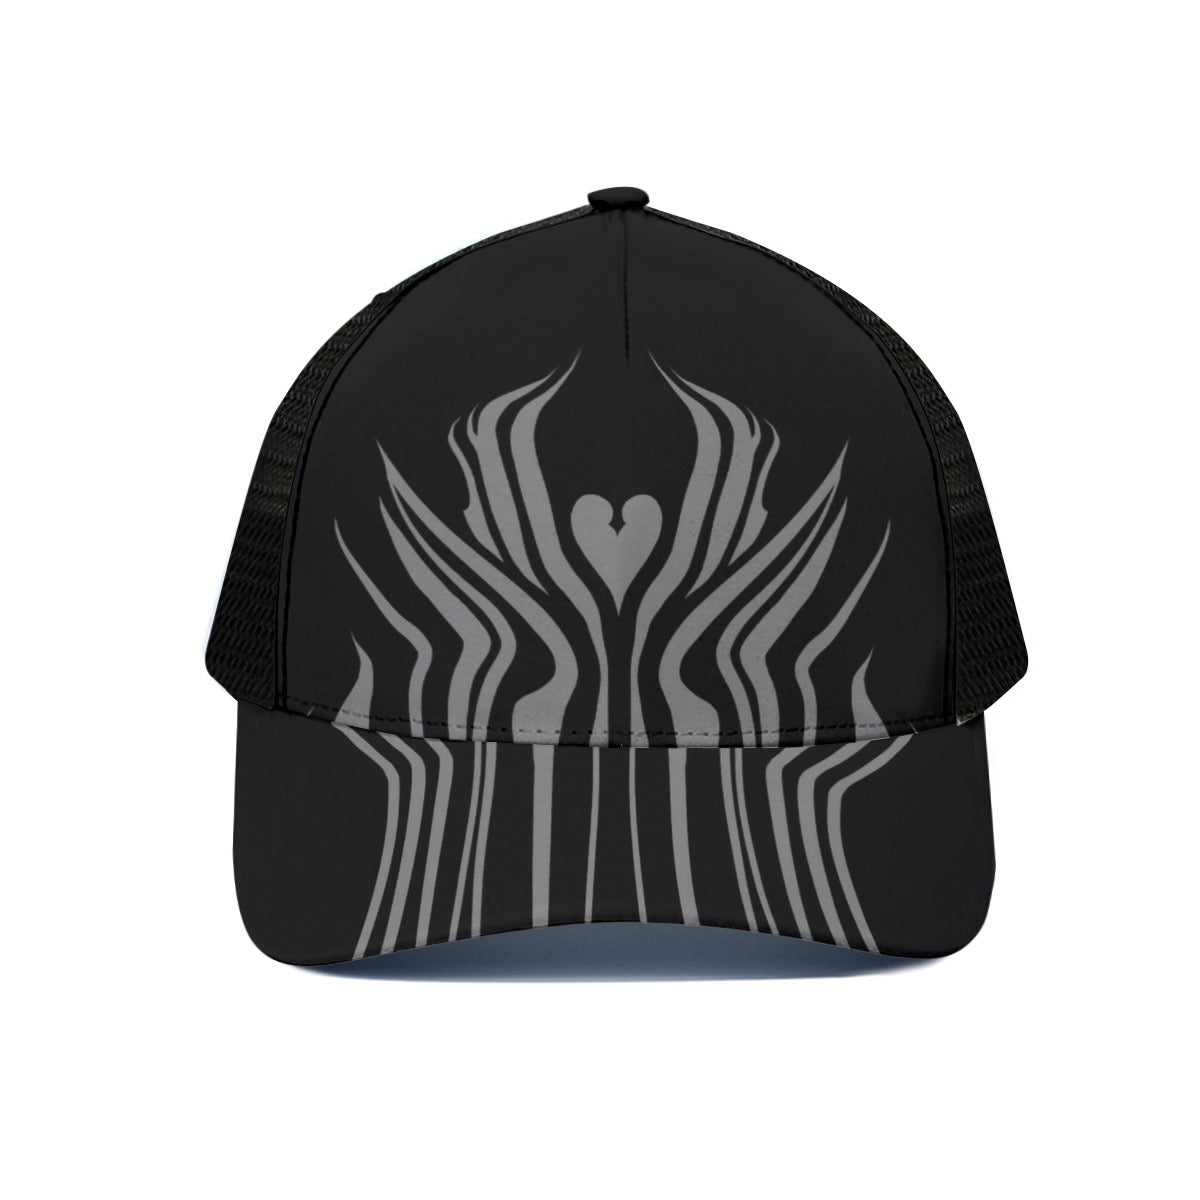 CyberLuv Mesh Trucker Hat Black